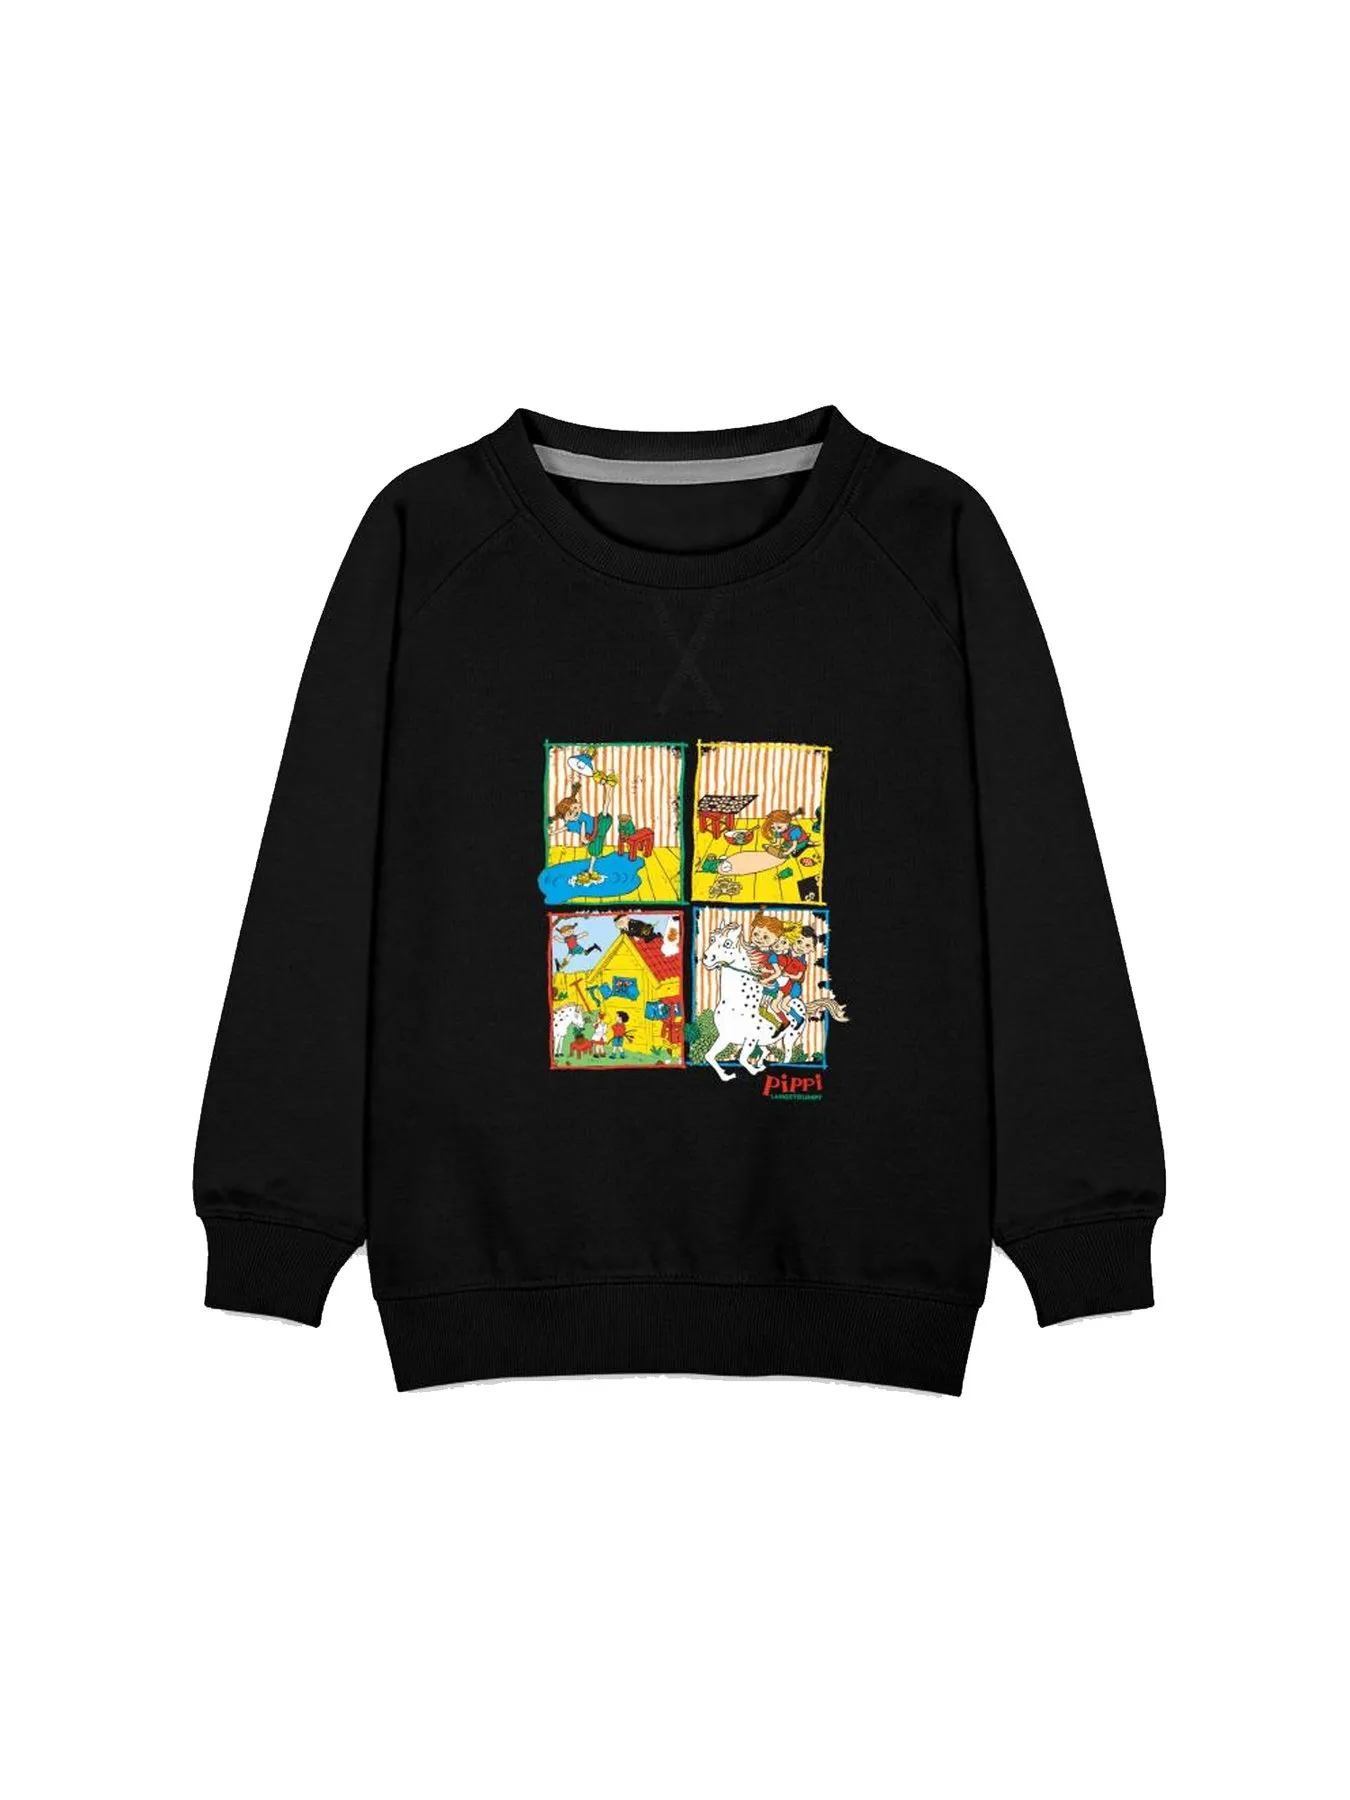 Sweatshirt Pippi Longstocking friends - Black